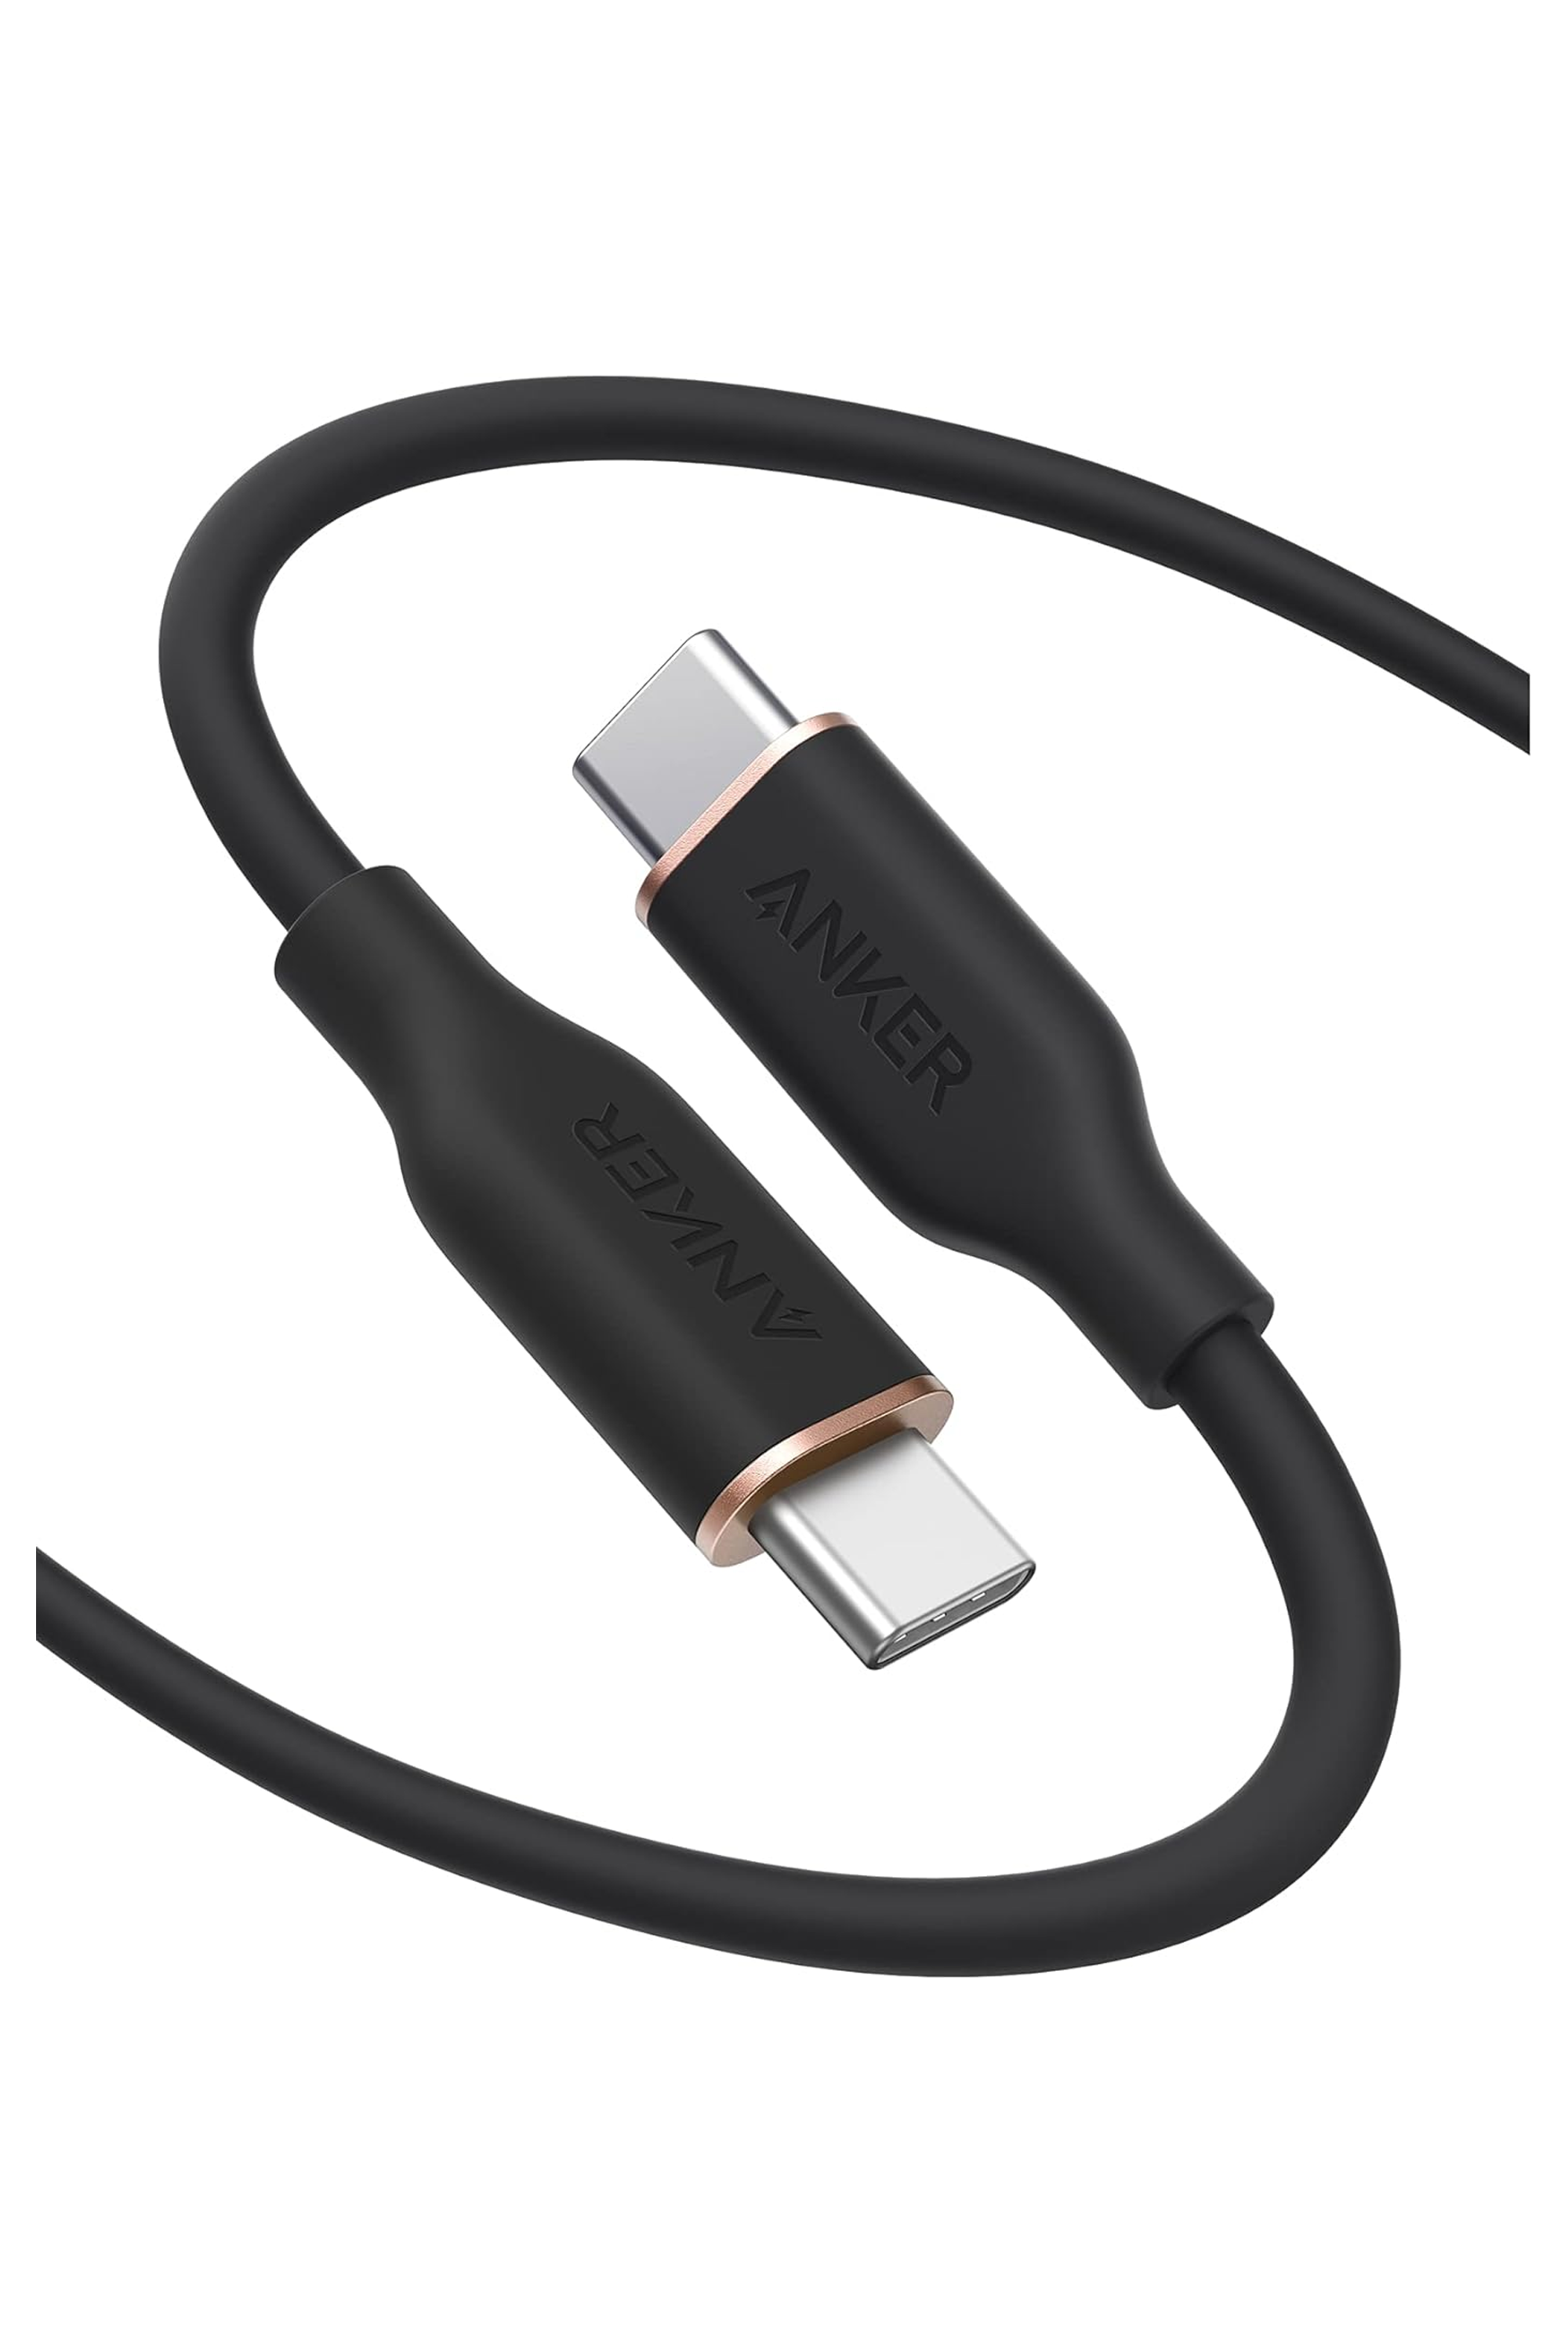 Anker PowerLine III USB-C Cable